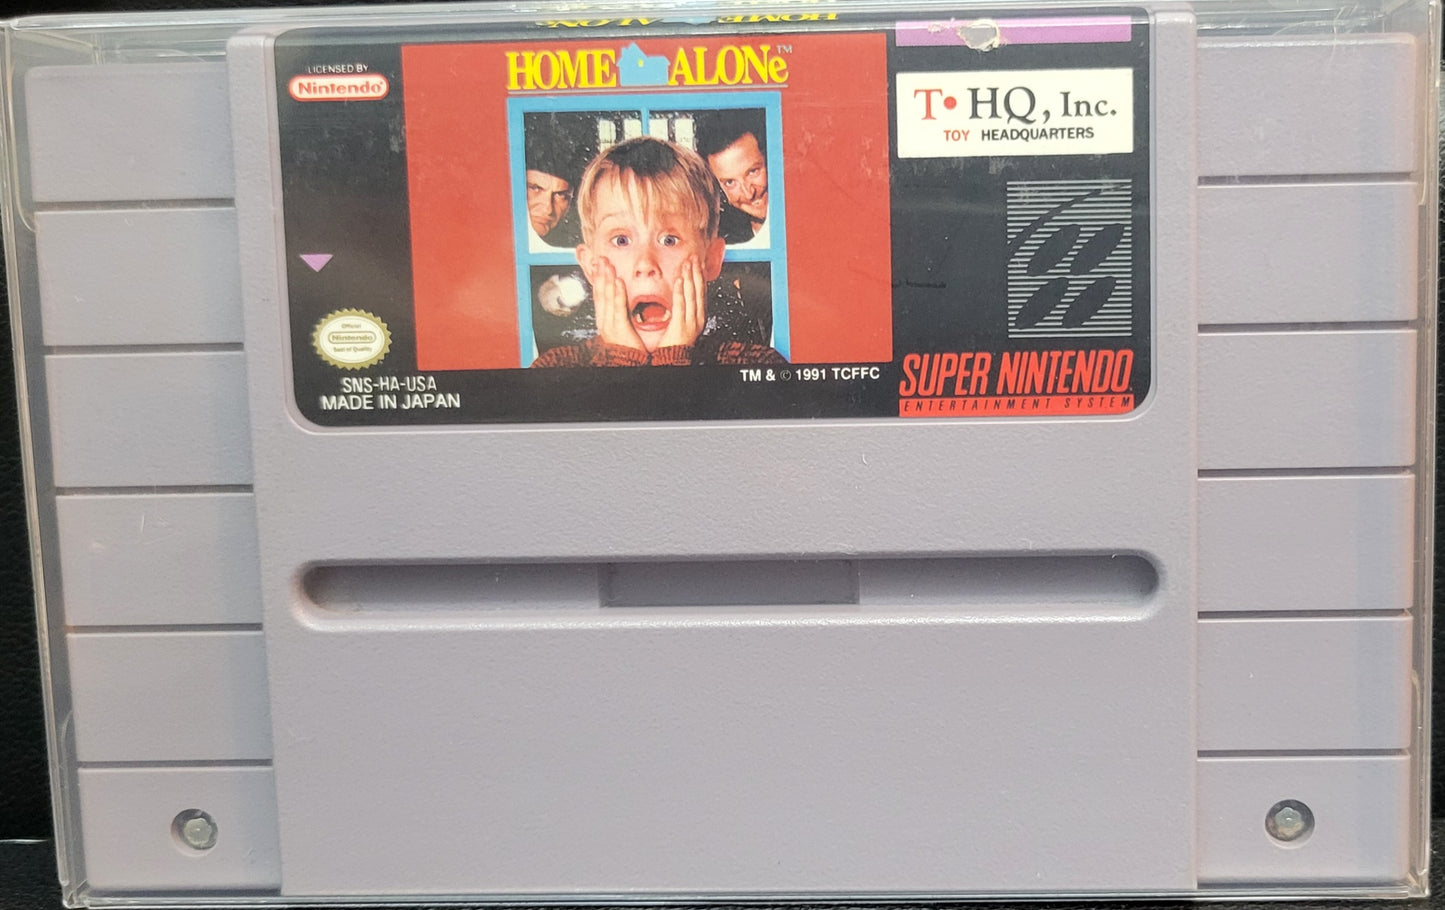 Home Alone 1991 SNES Authentic Cartridge (Super Nintendo Entertainment System) Classic Arcade Game Original Condition + Protector